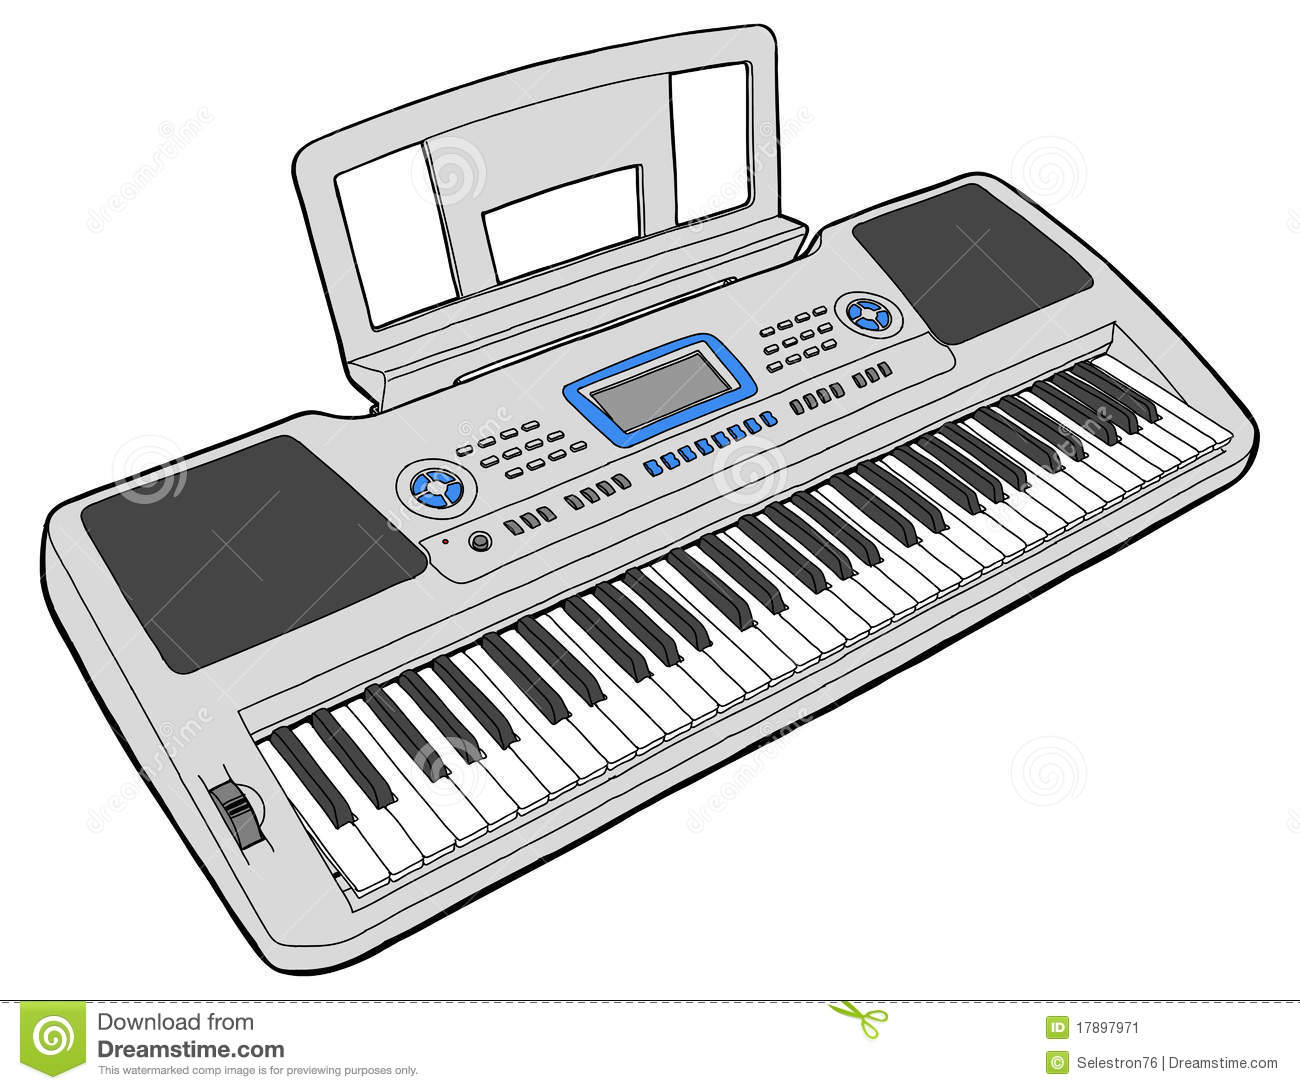 Electronic Musical Keyboard   Synth Stock Image   Image  17897971